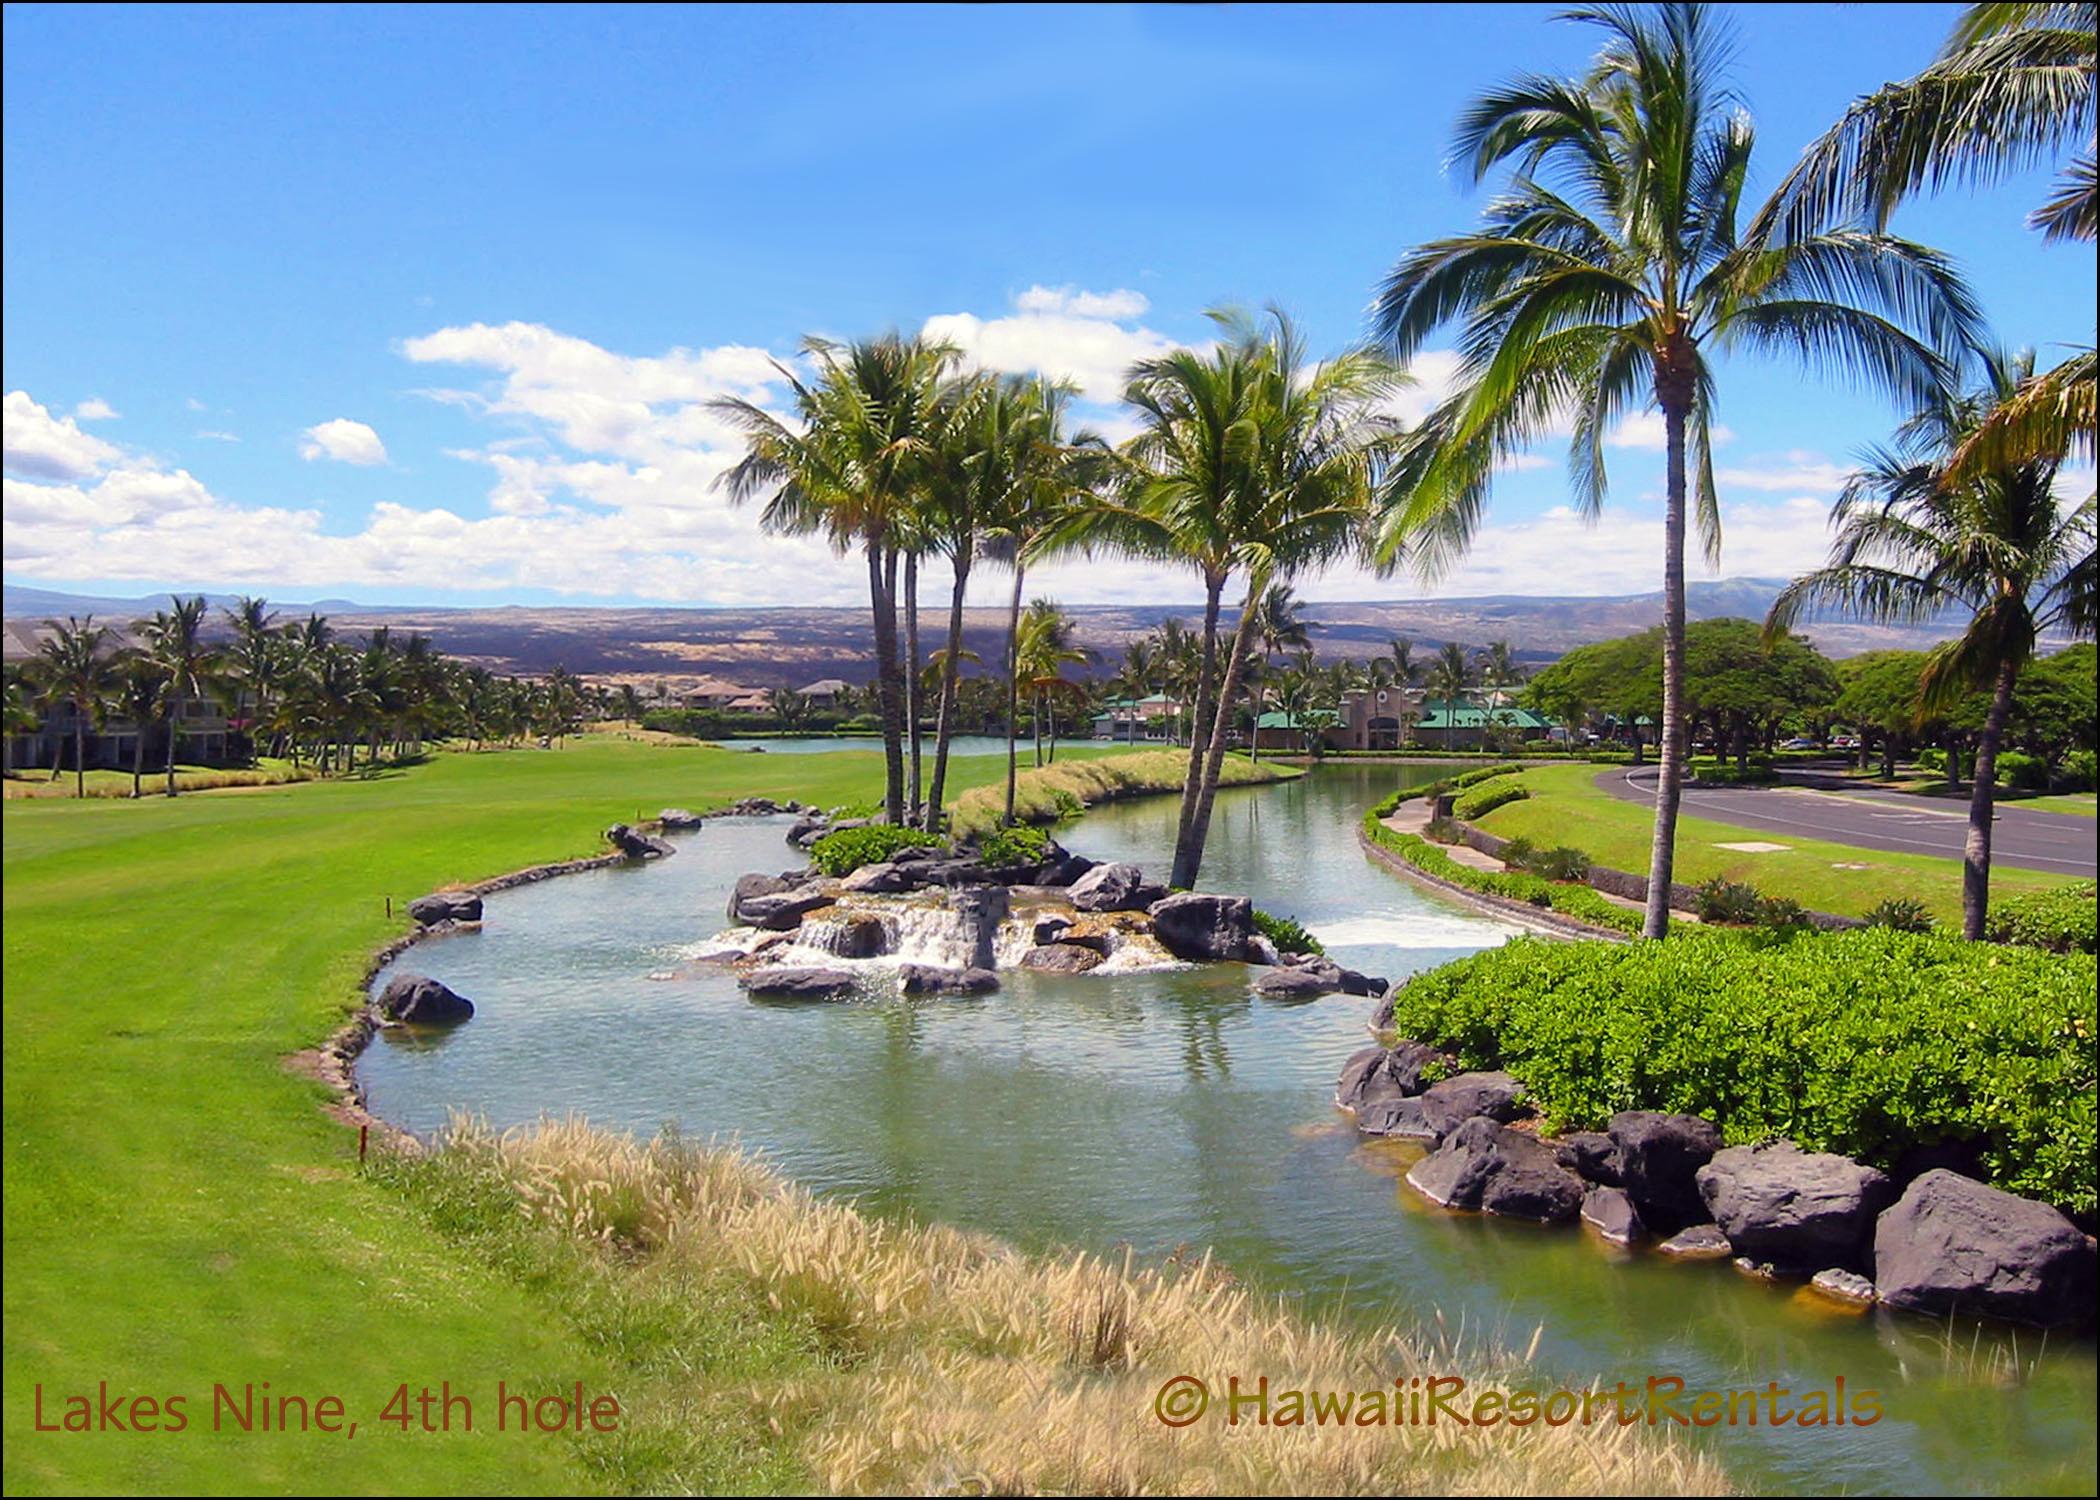 Lakes Nine, 4th hole, Waikoloa Beach Resort Golf